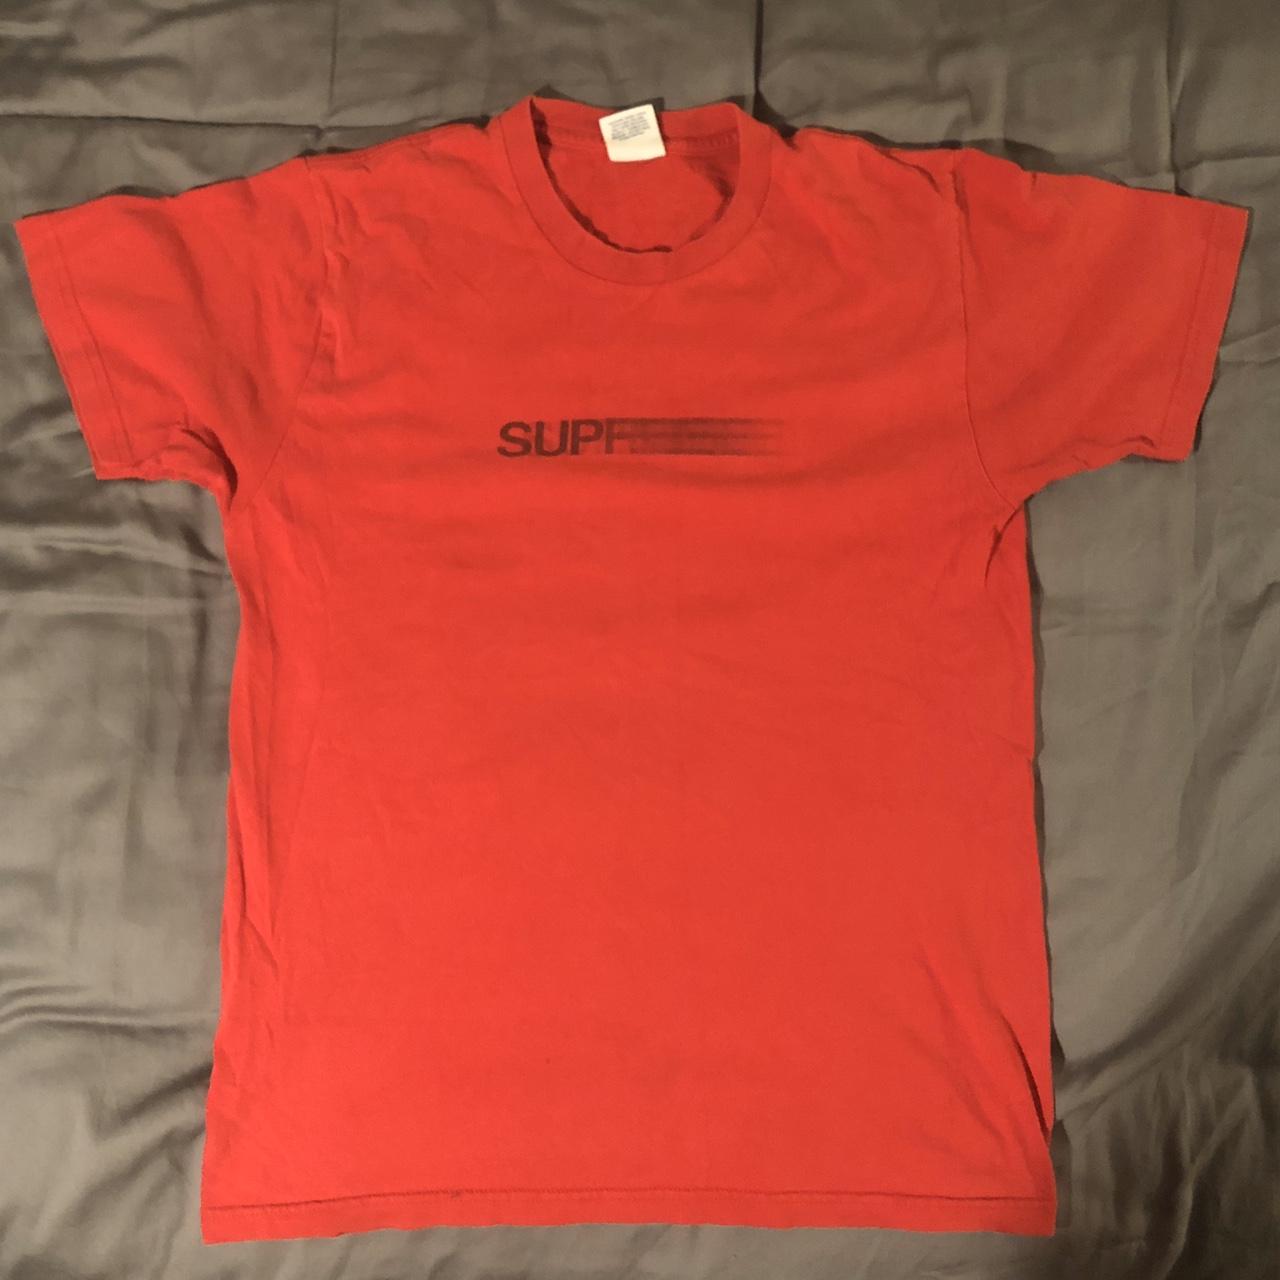 red supreme shirt